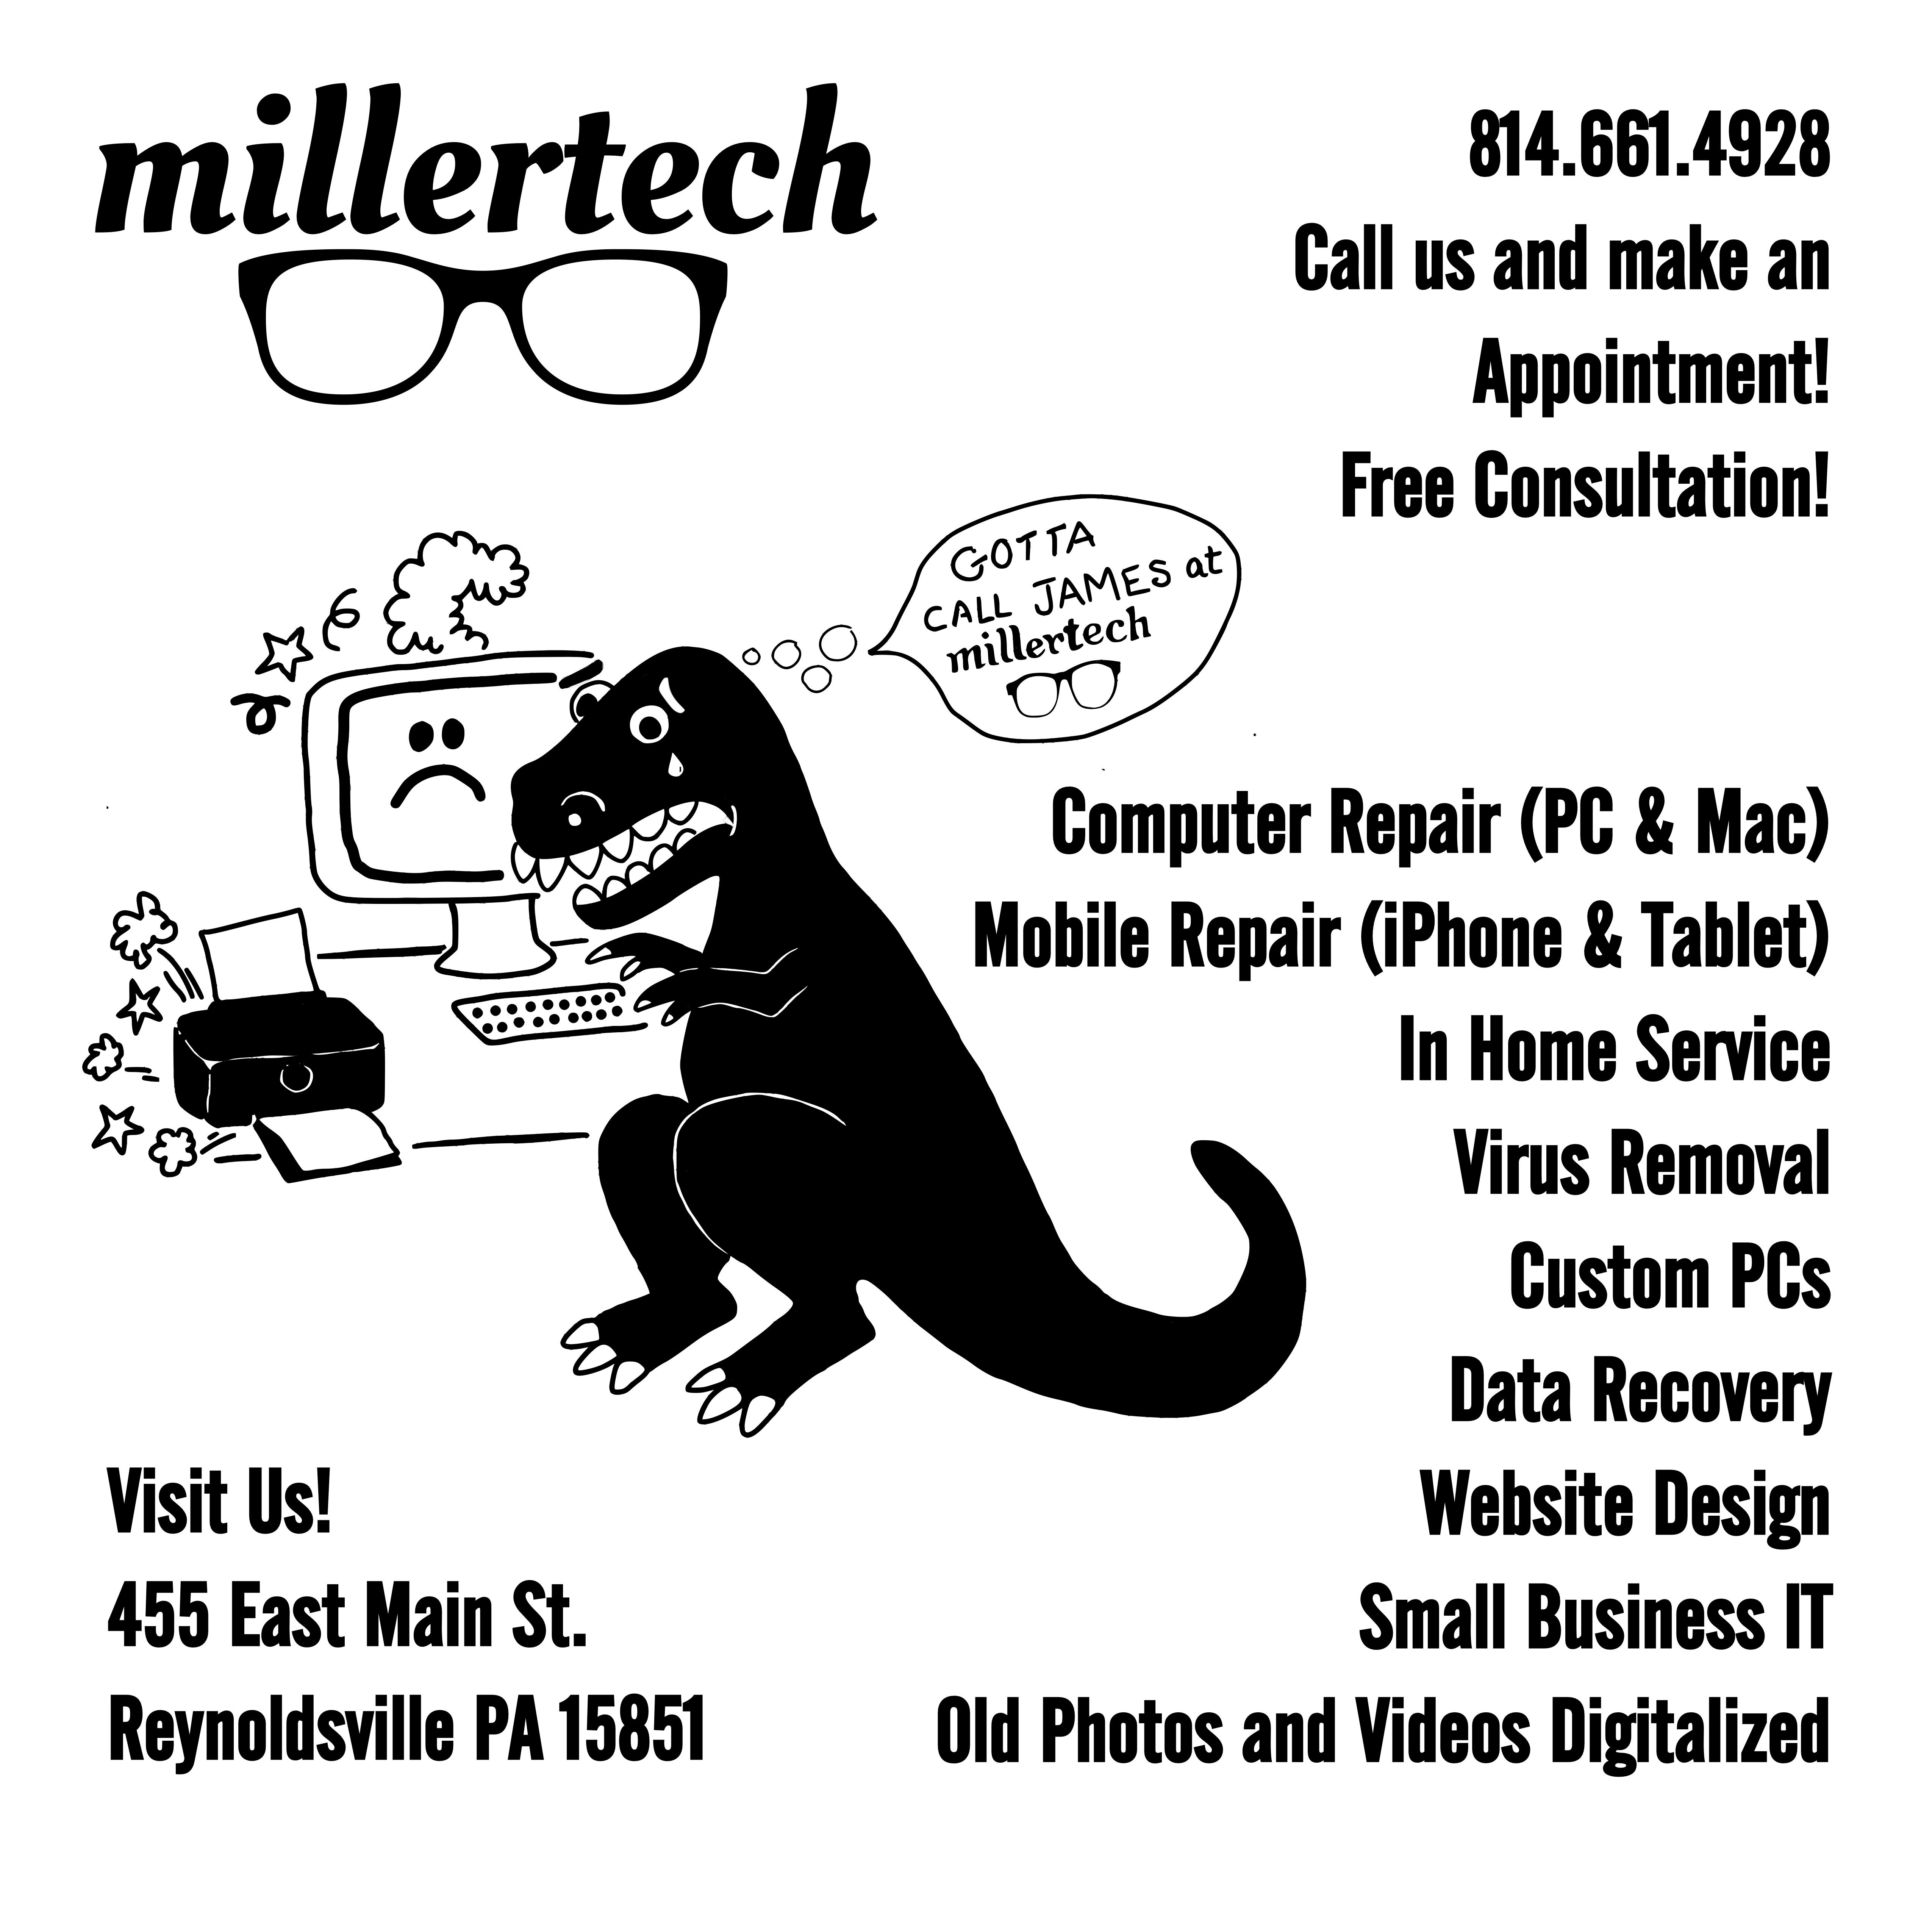 Millertech Technology Services 455 E Main St, Reynoldsville Pennsylvania 15851